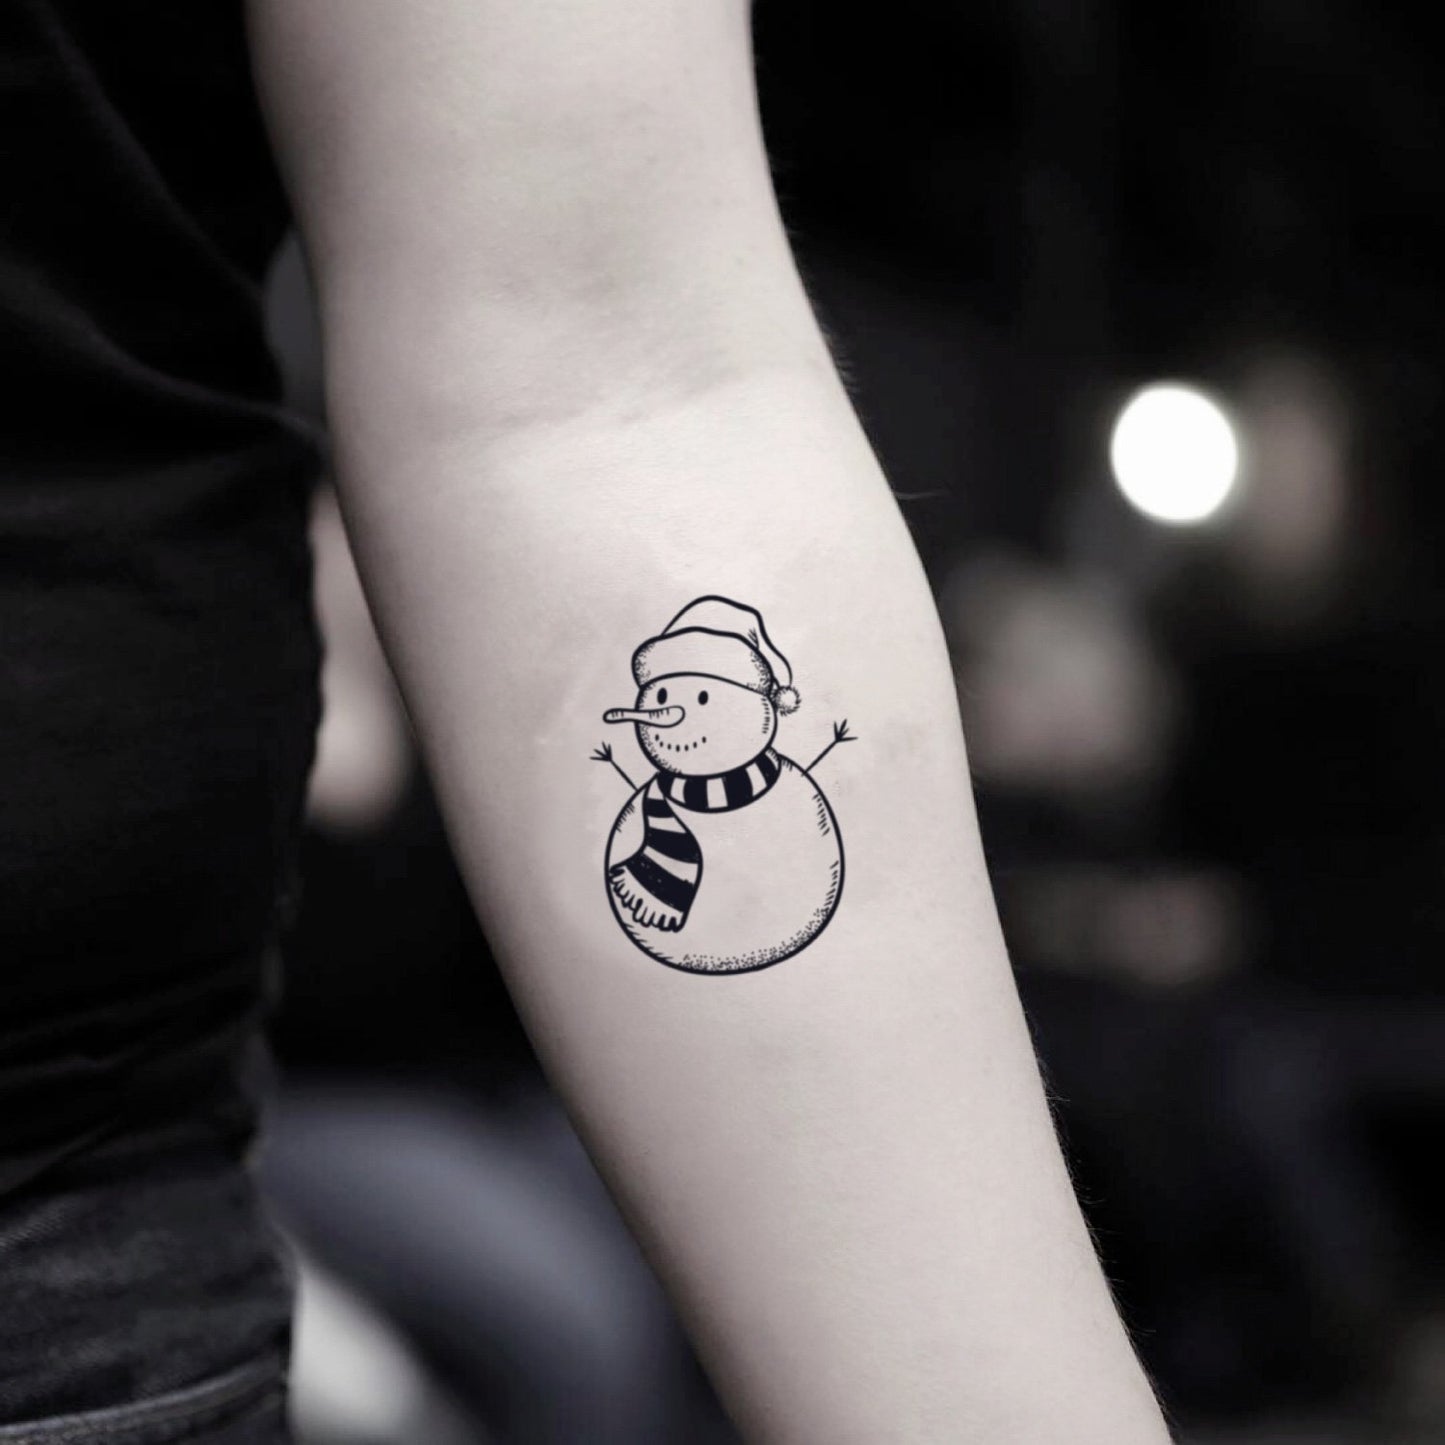 fake small snowman illustrative temporary tattoo sticker design idea on inner arm